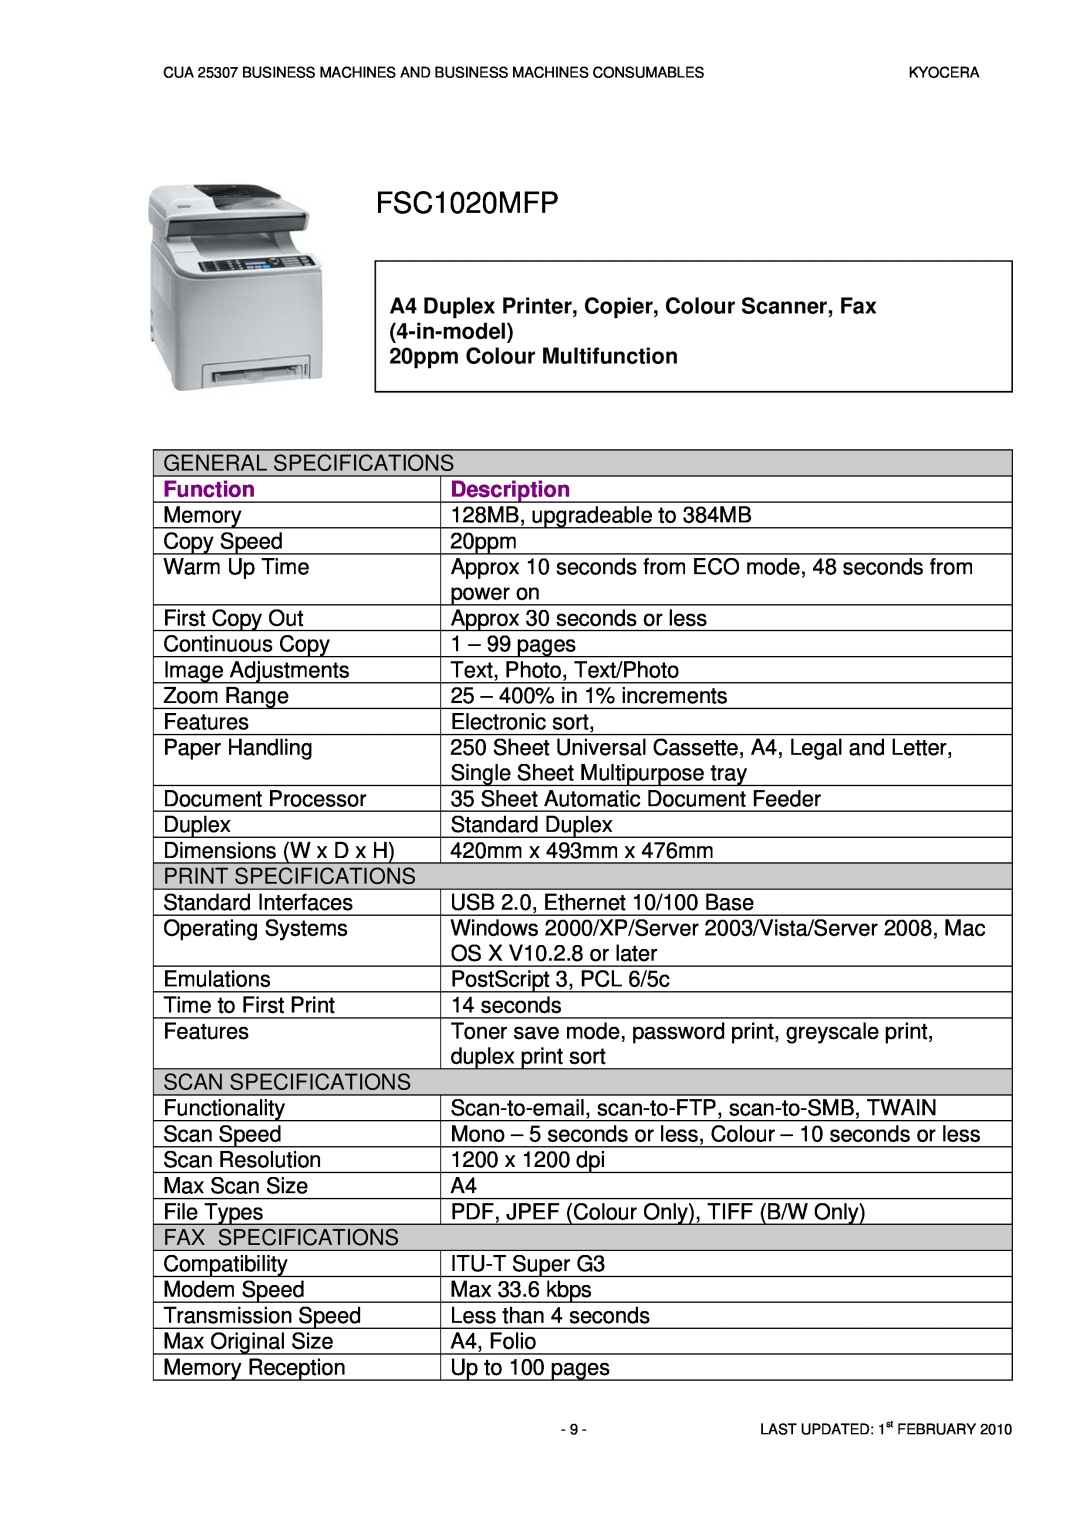 Kyocera CUA 25307 manual FSC1020MFP, 20ppm Colour Multifunction, Function, Description 